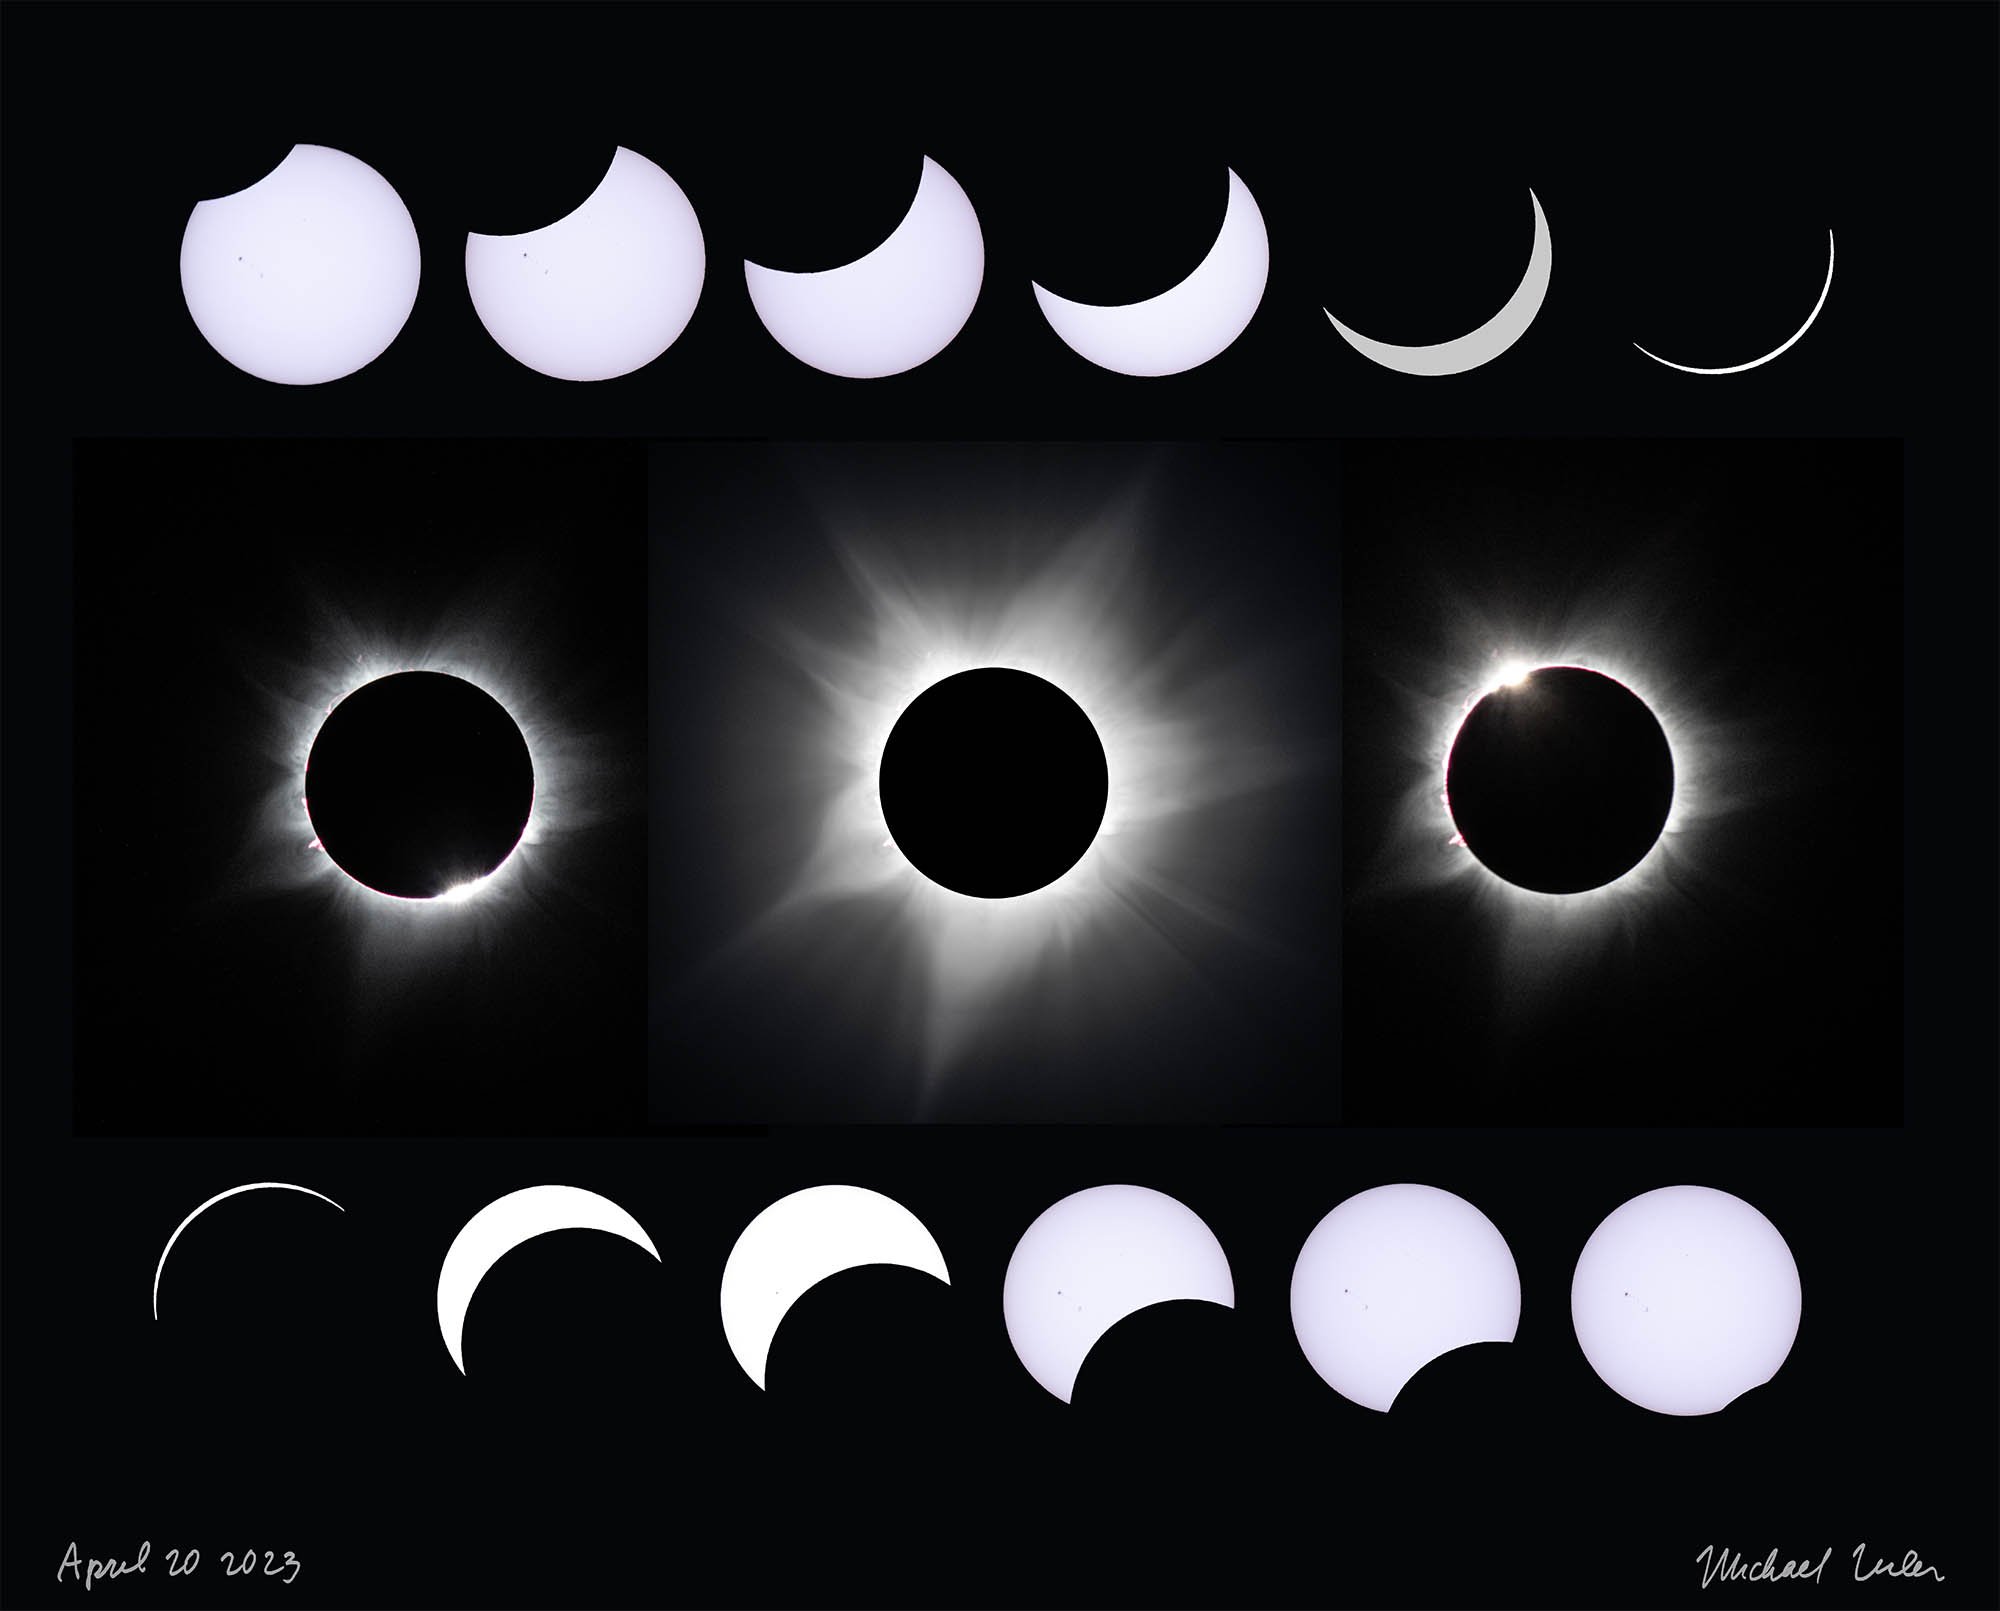 Solar Eclipse 2024  Southwest Research Institute